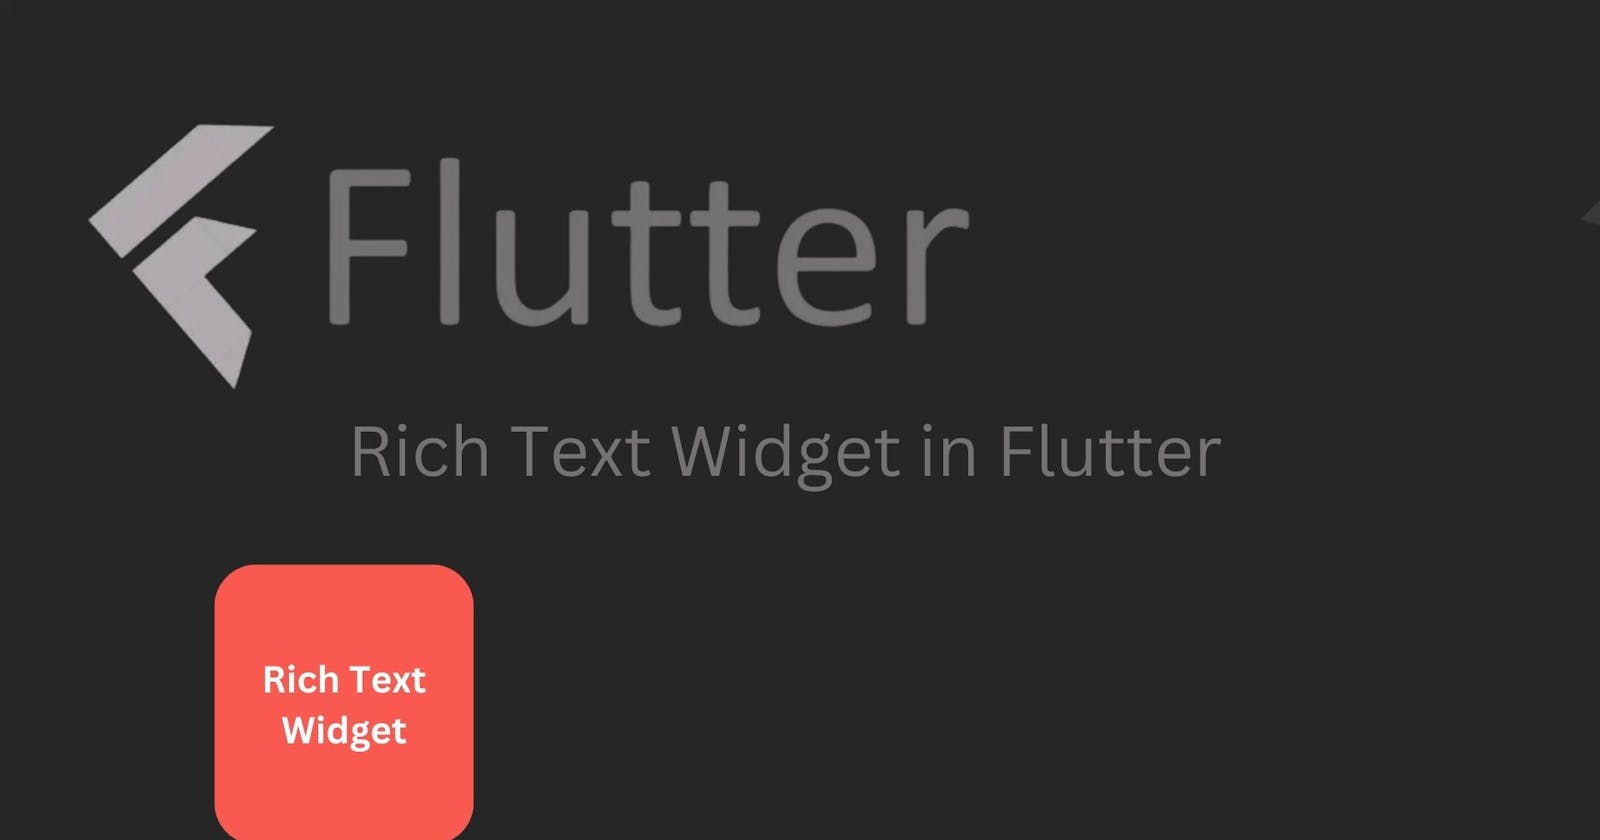 Rich Text Widget in Flutter